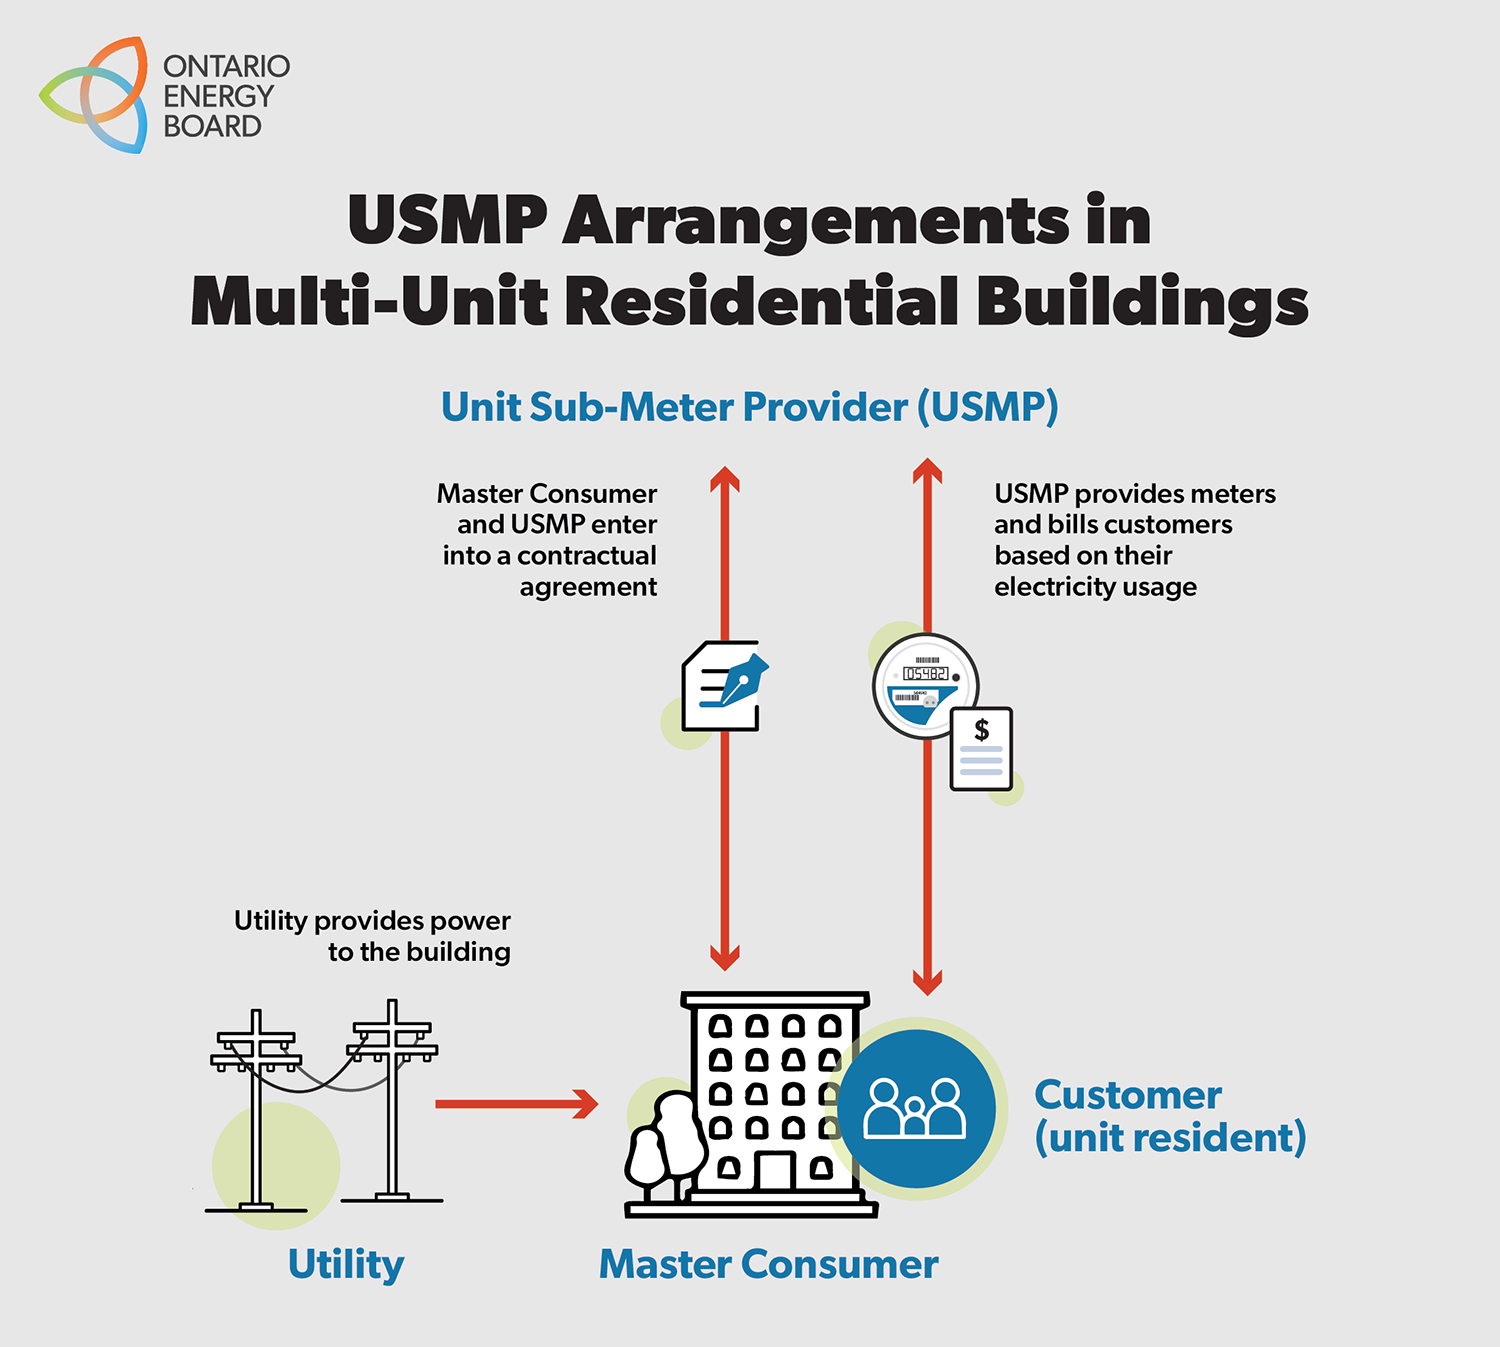 USMP arrangements in multi-unit residential buildings